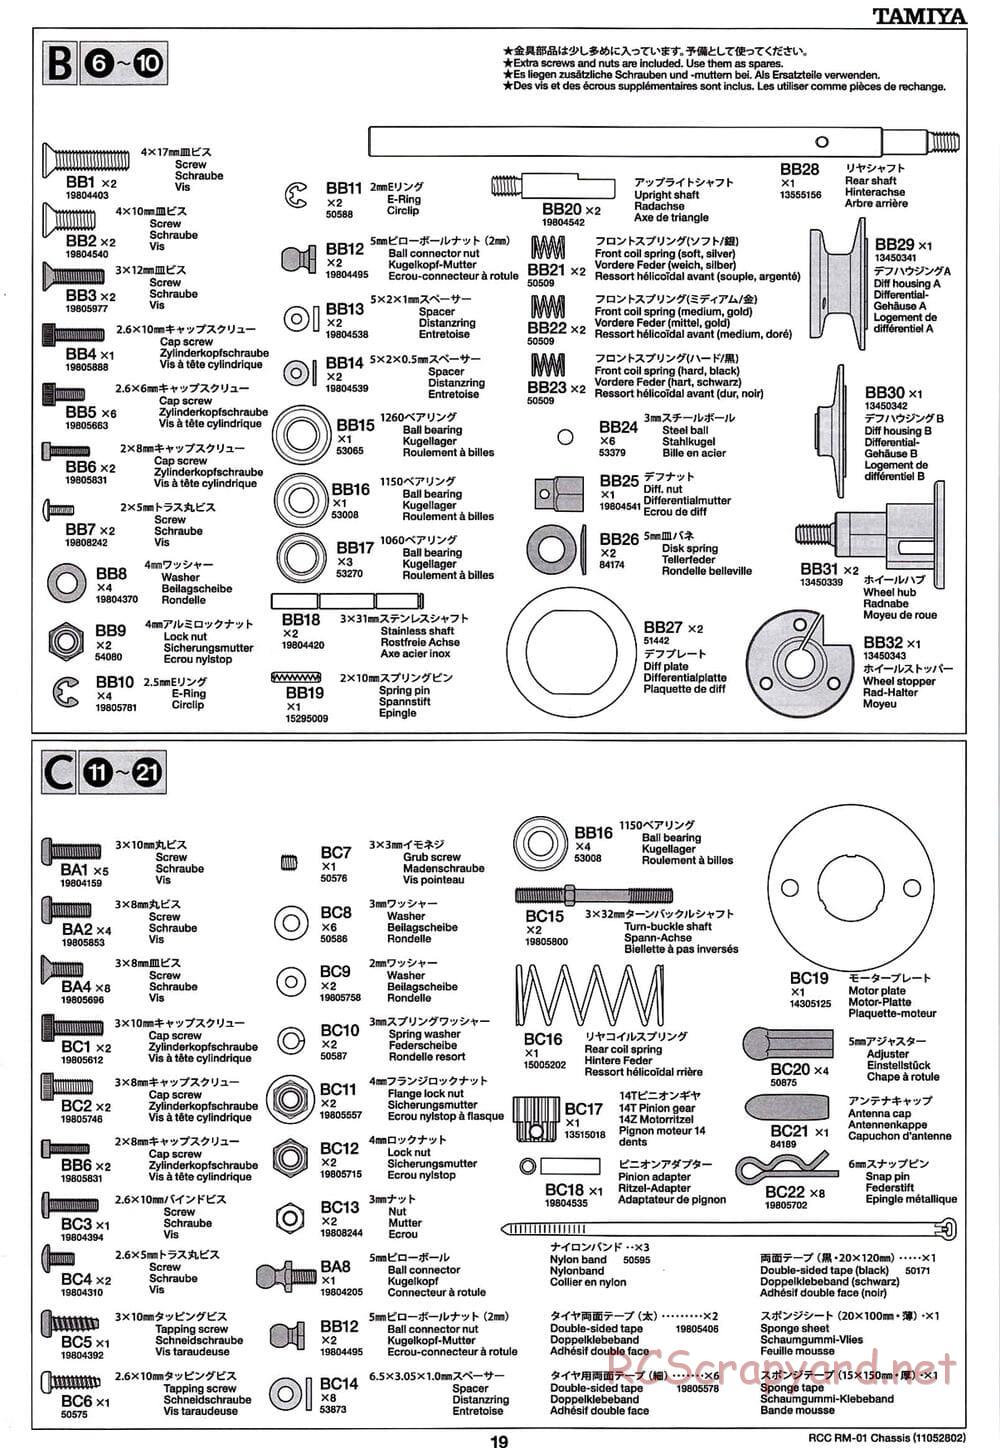 Tamiya - RM-01 Chassis - Manual - Page 19